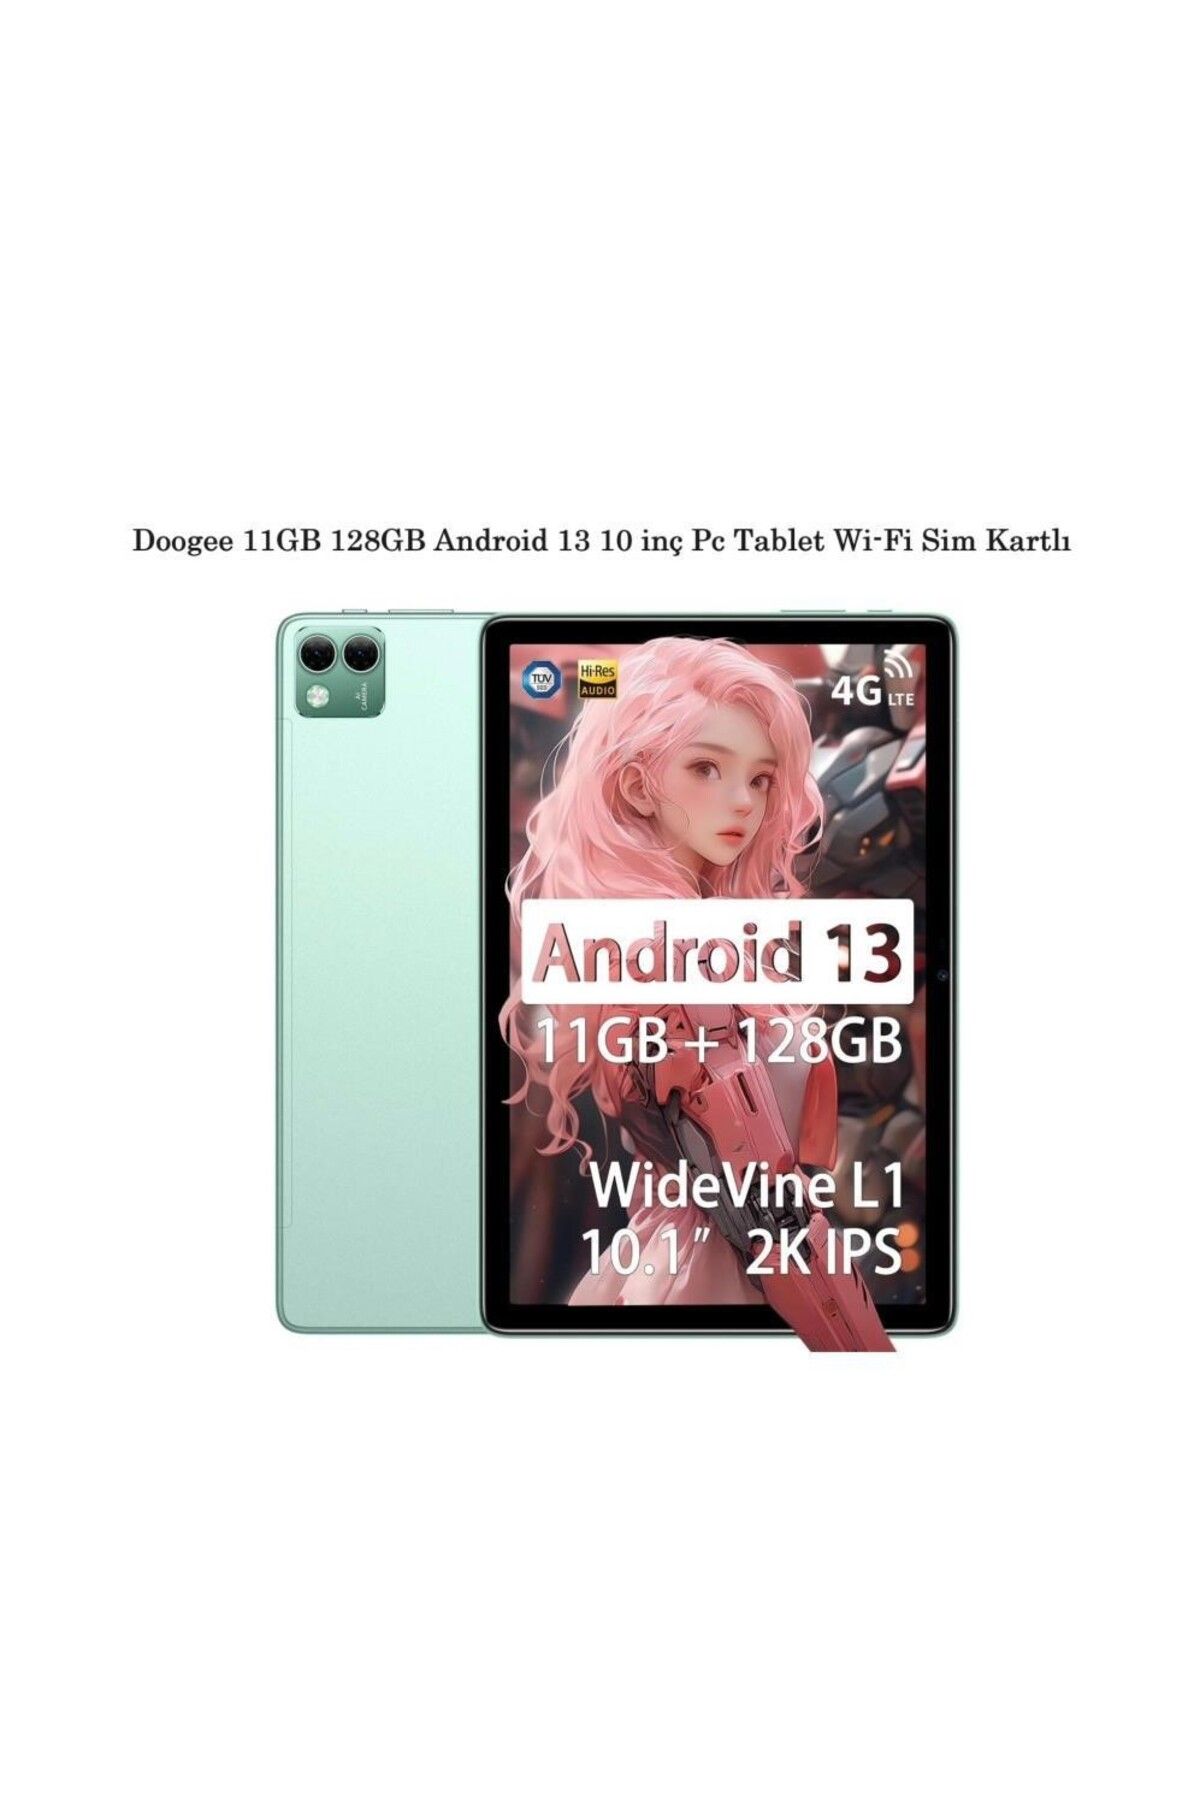 Doogee T10S Doogee 11GB 128GB Android 13 10 inç Pc Tablet Wi-Fi Sim Kartlı